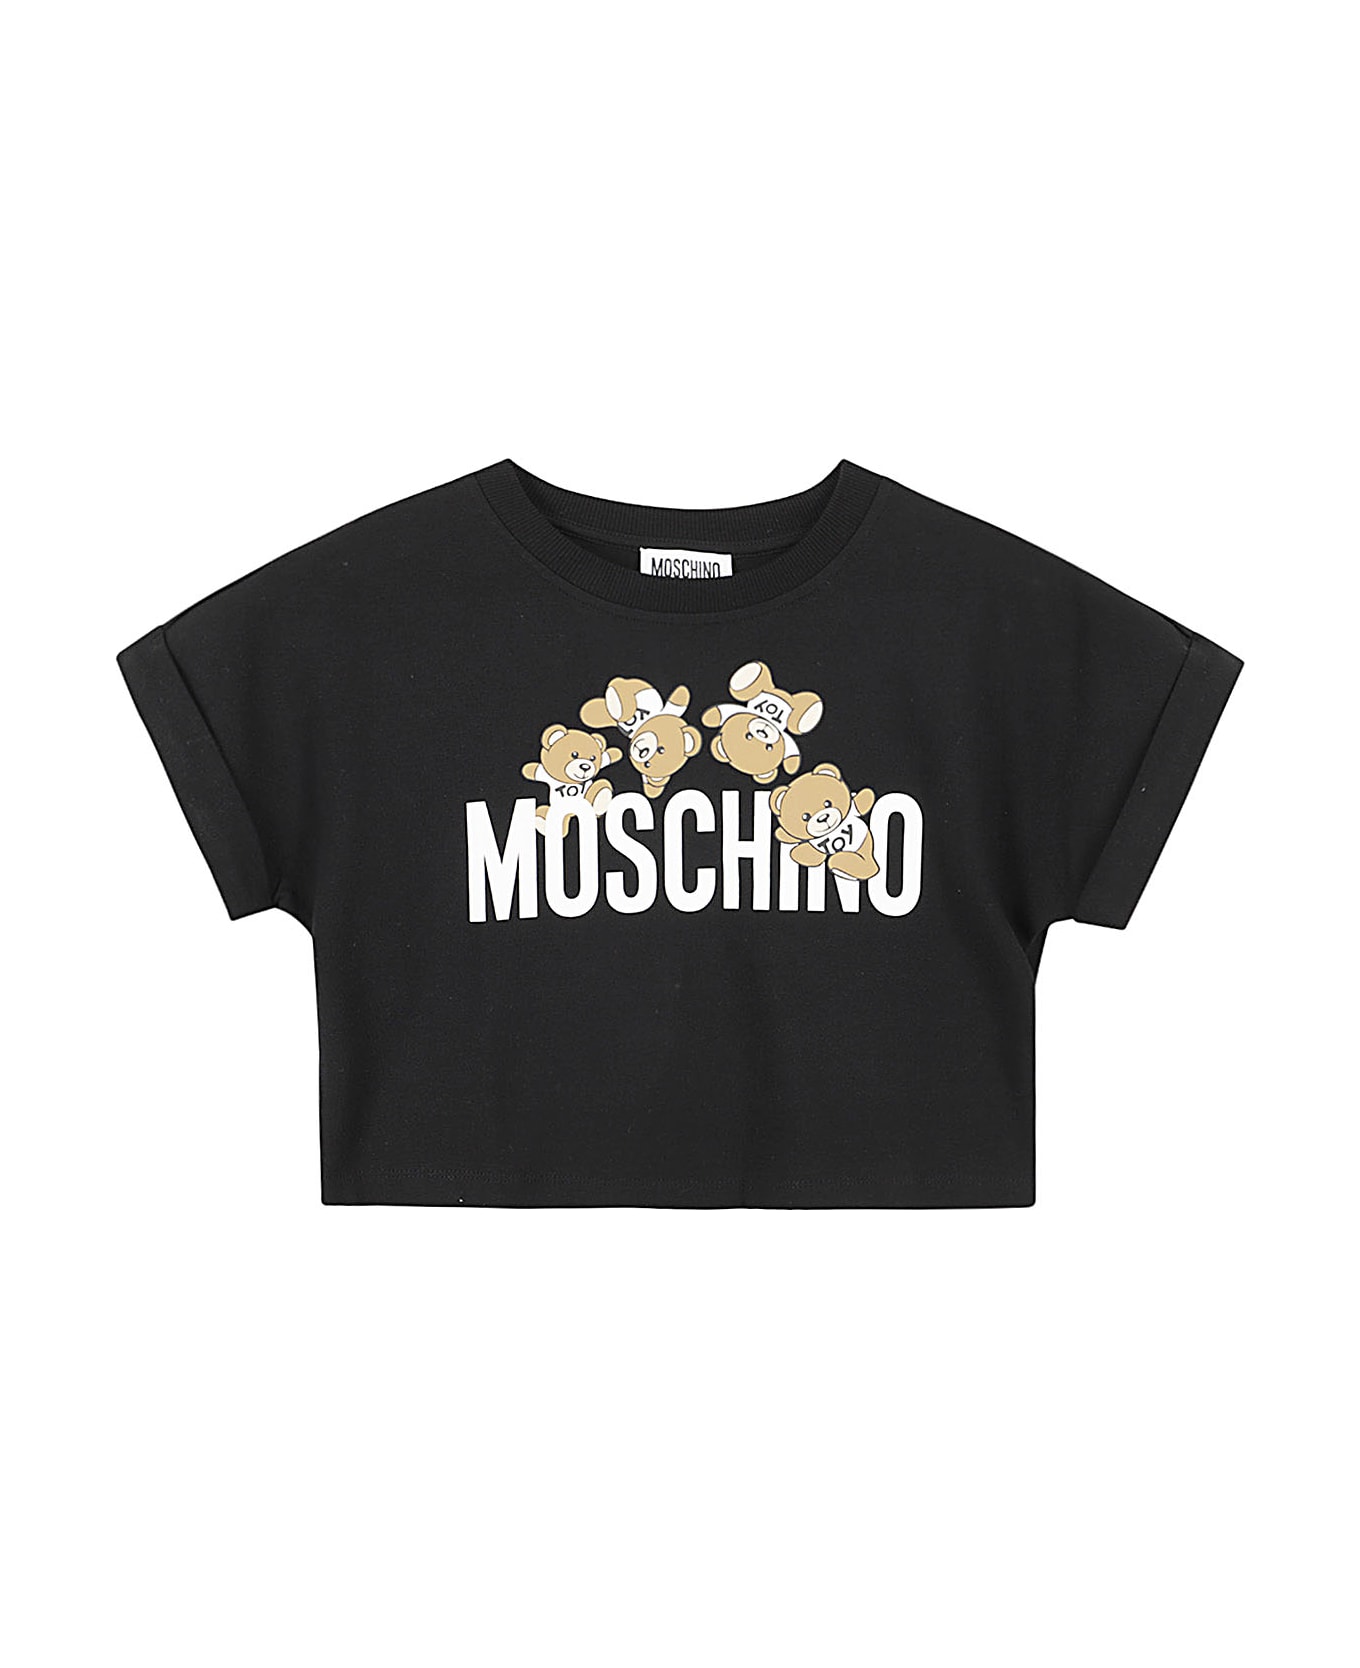 Moschino Tshirt Addition - Nero